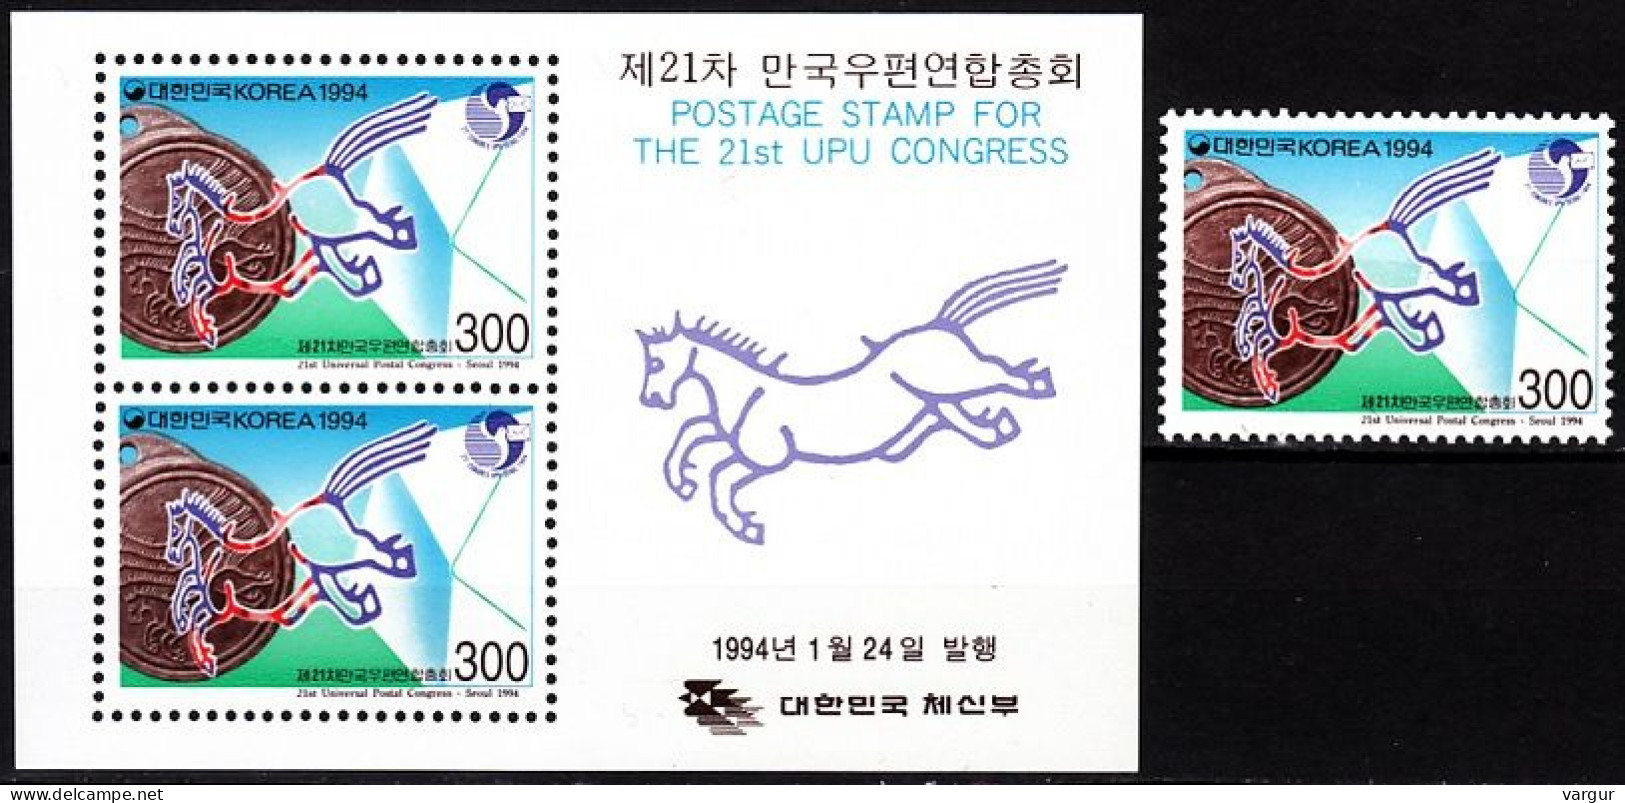 KOREA SOUTH 1994 Post: UPU Congress. 3rd Issue. Postal Horse Seal, MNH - UPU (Universal Postal Union)